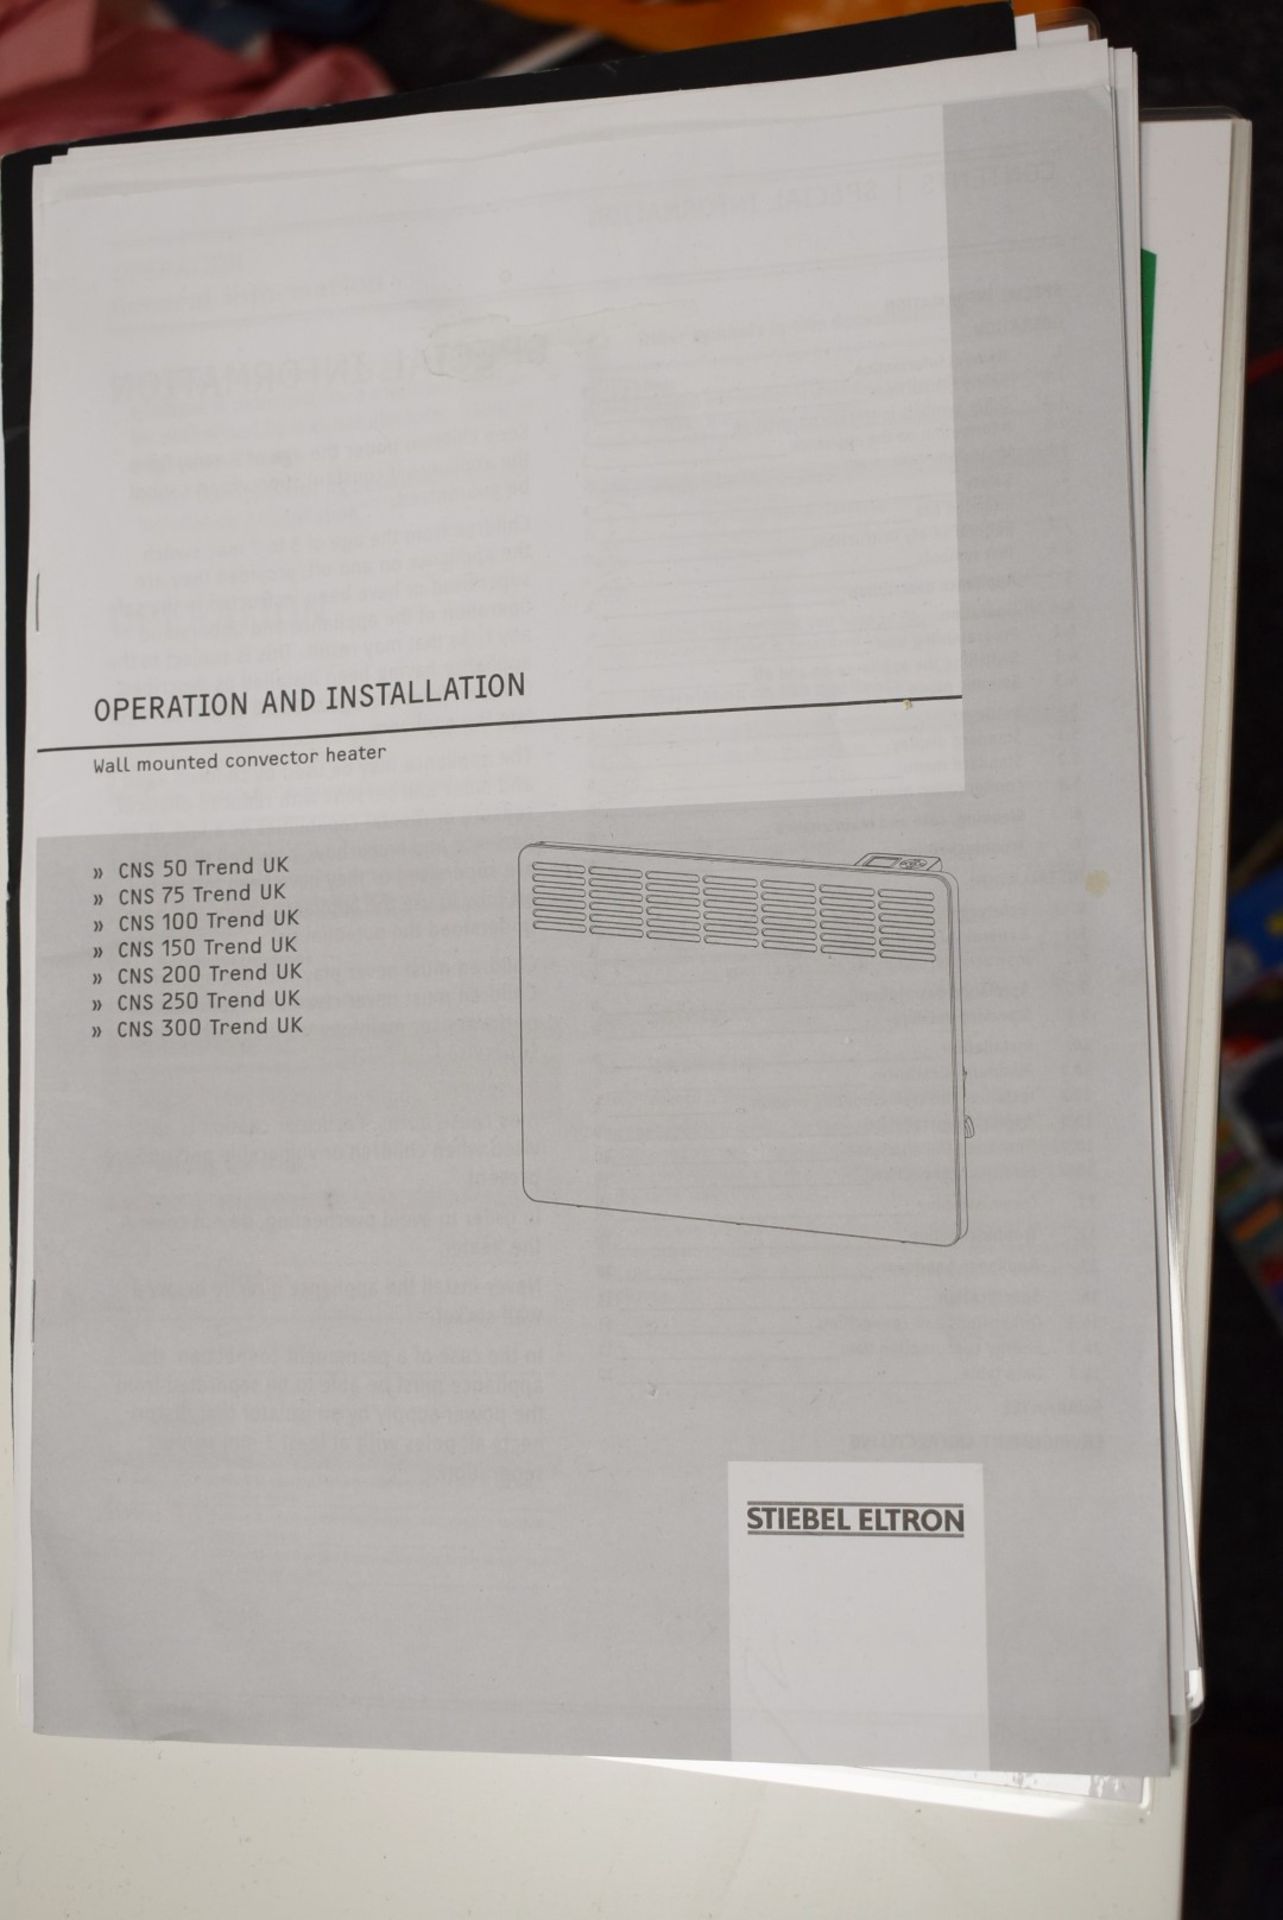 1 x Stiebel Eltron 2.0kW Wall Mounted Heater - 240v UK Plug - Type CNS 200 - Image 2 of 4